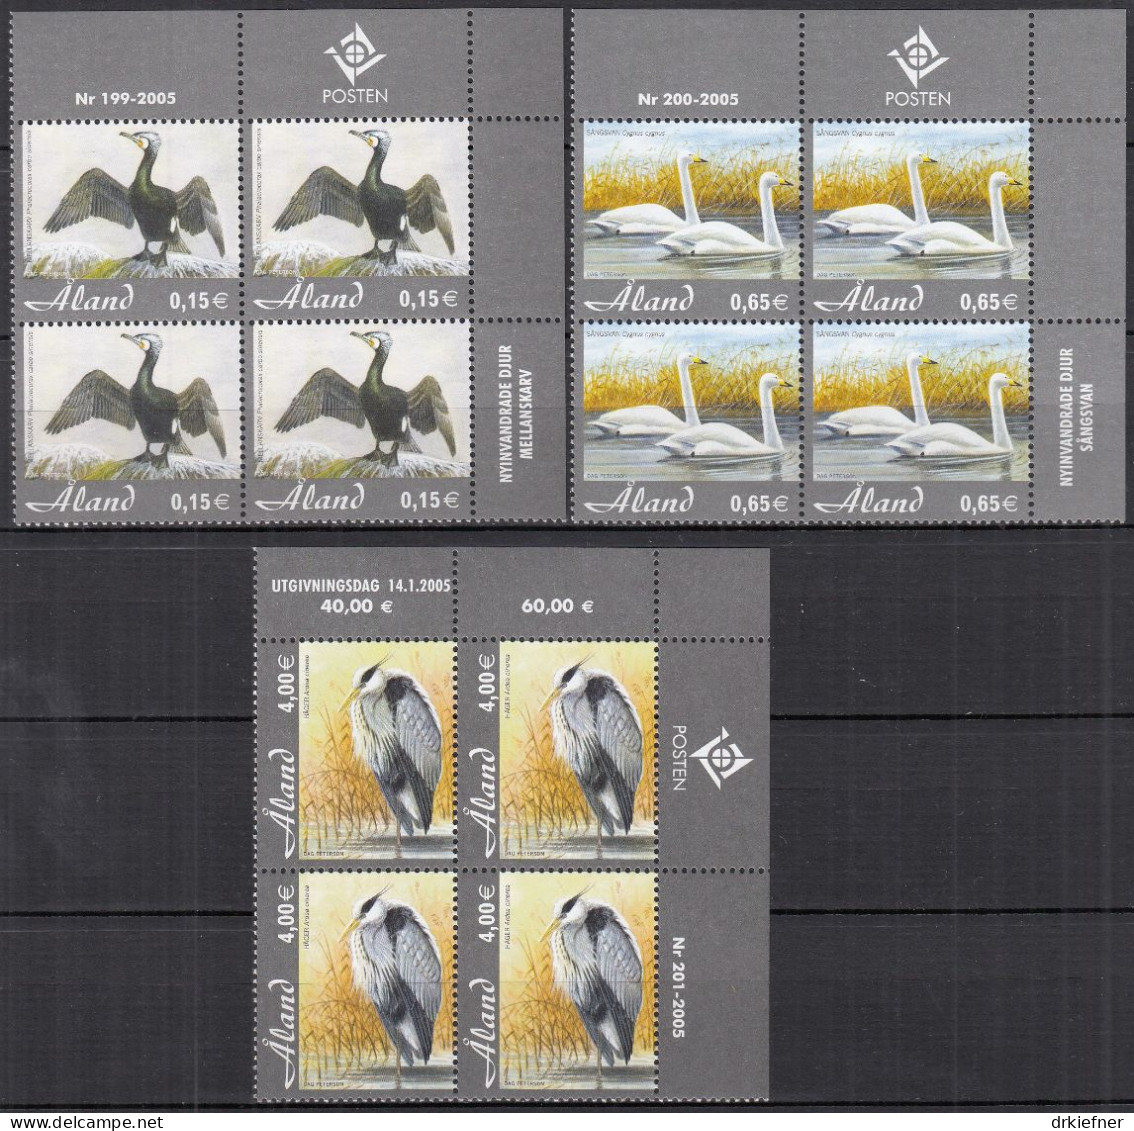 ALAND  244-246, 4erBlock Eckrand, Postfrisch **, 2005, Vögel: Kormoran, Schwan, Graureiher - Aland